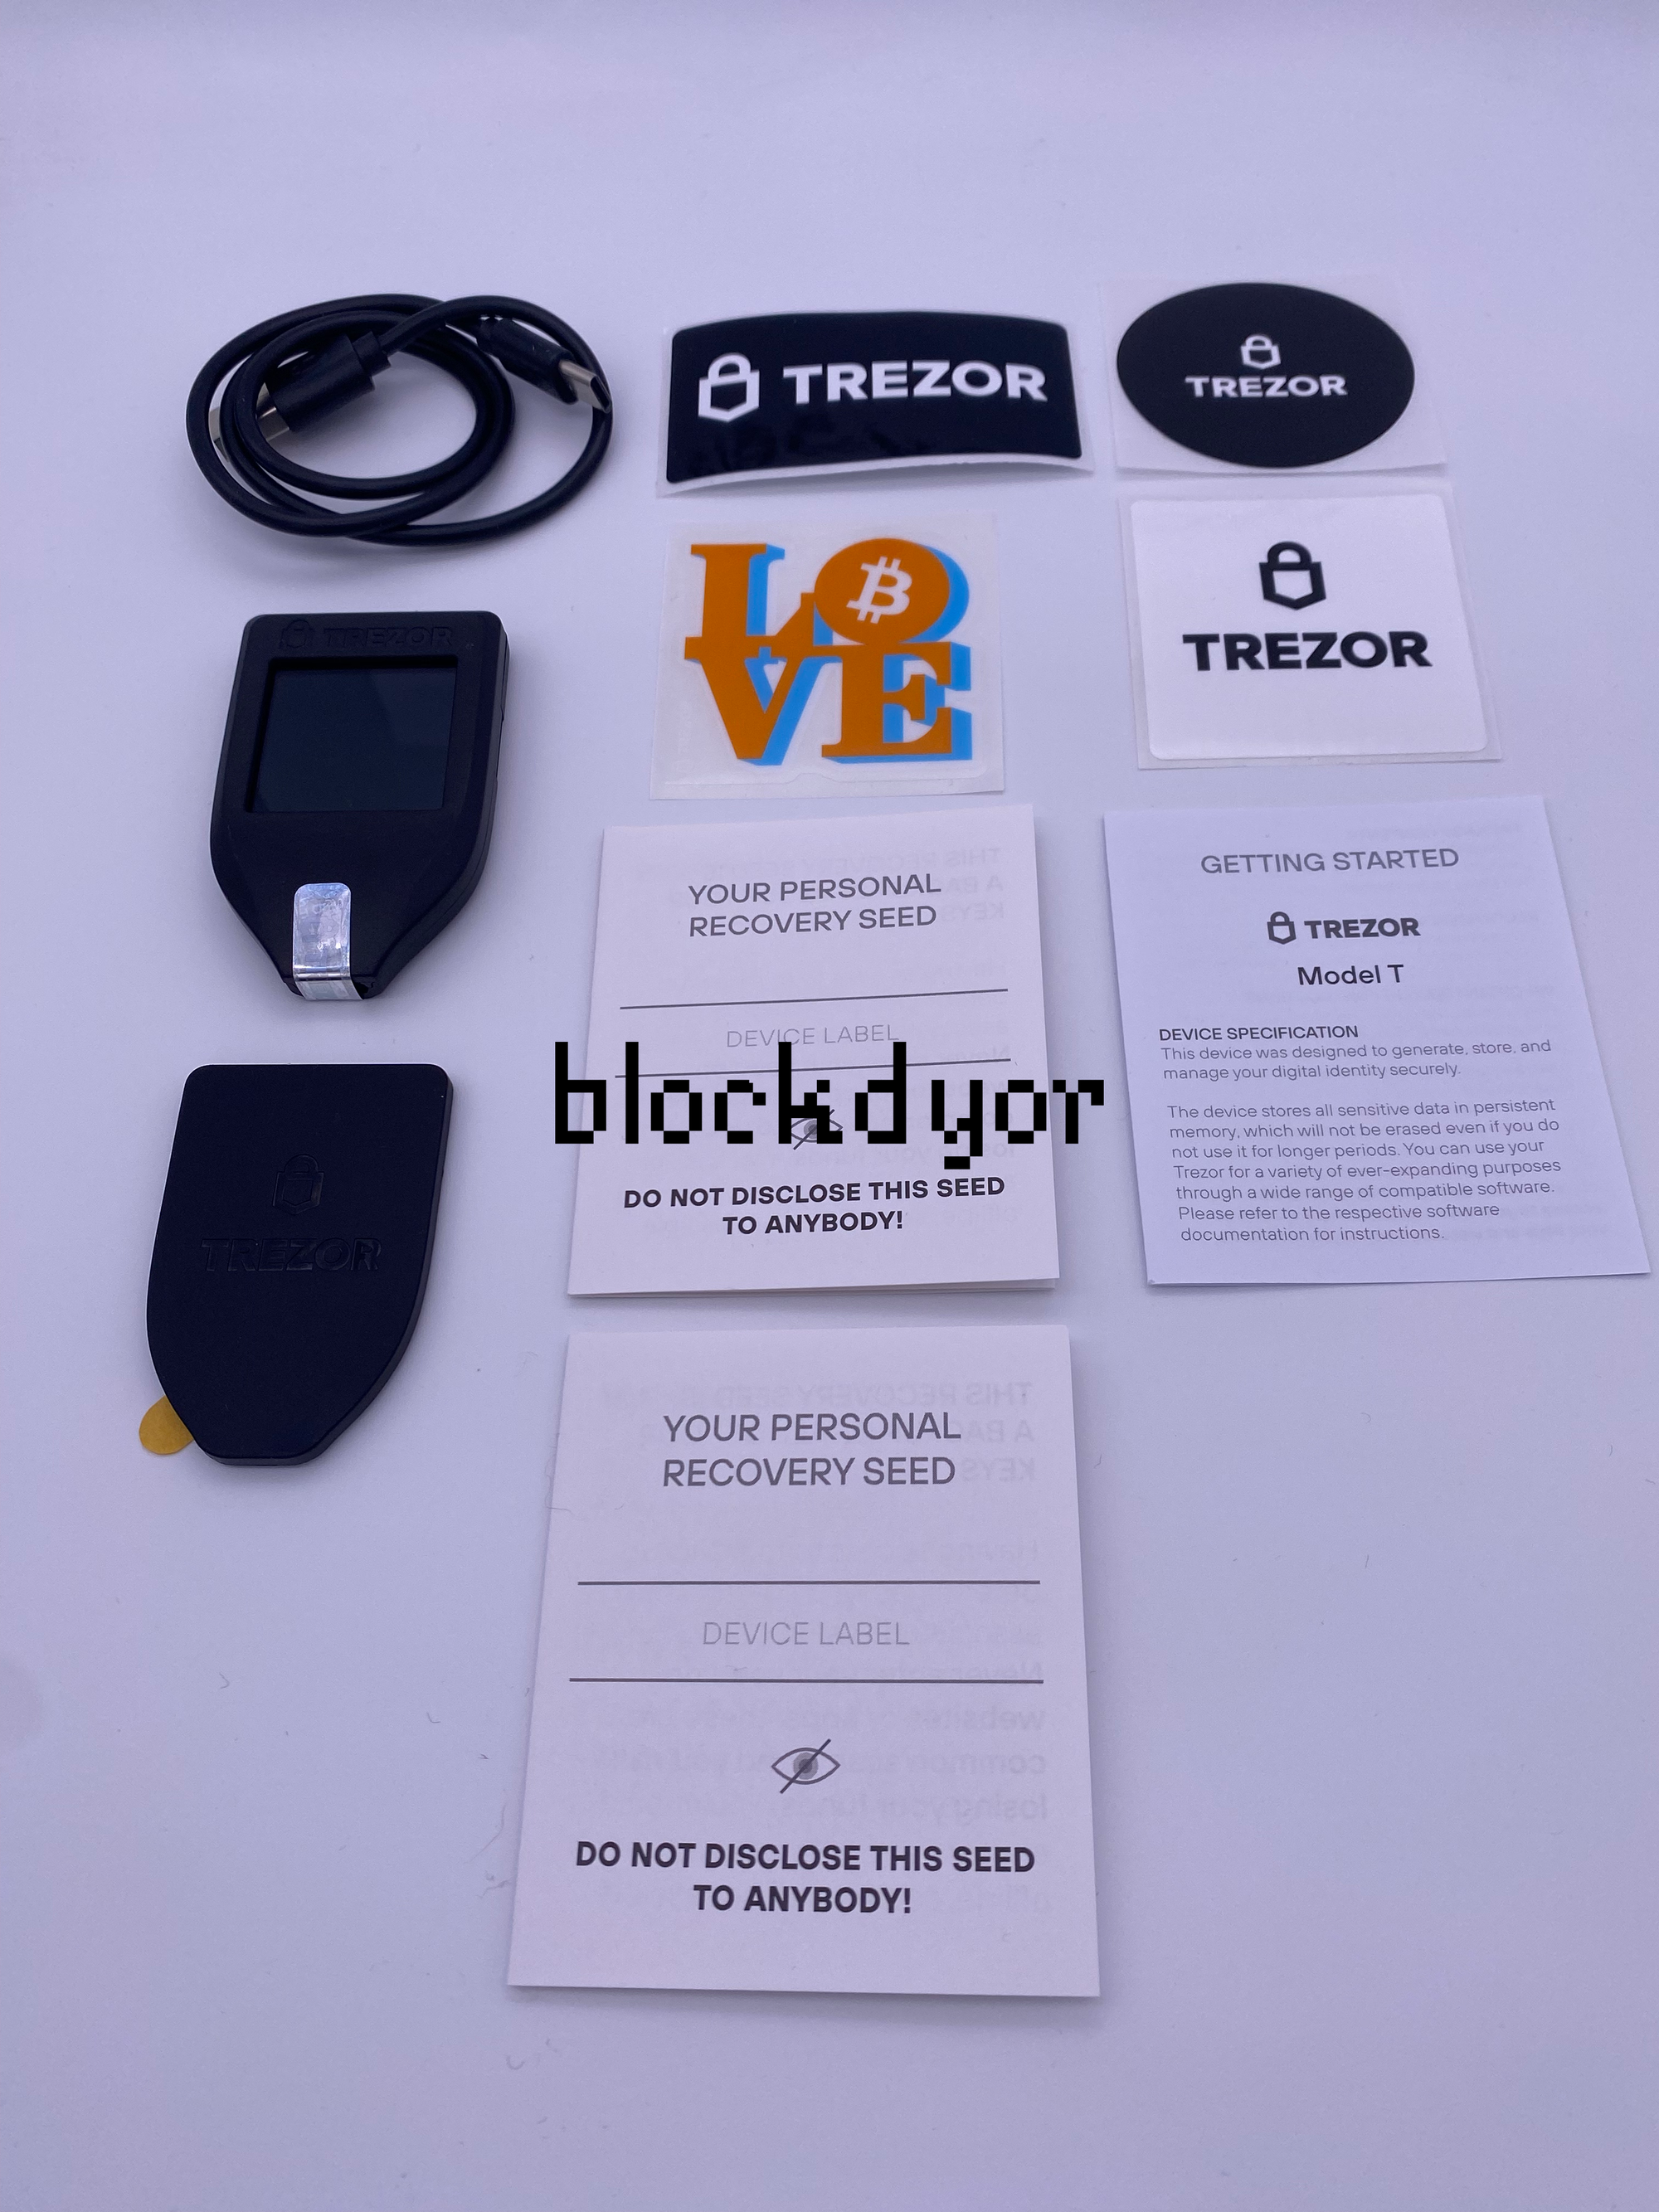 Trezor Model T: items included in the box